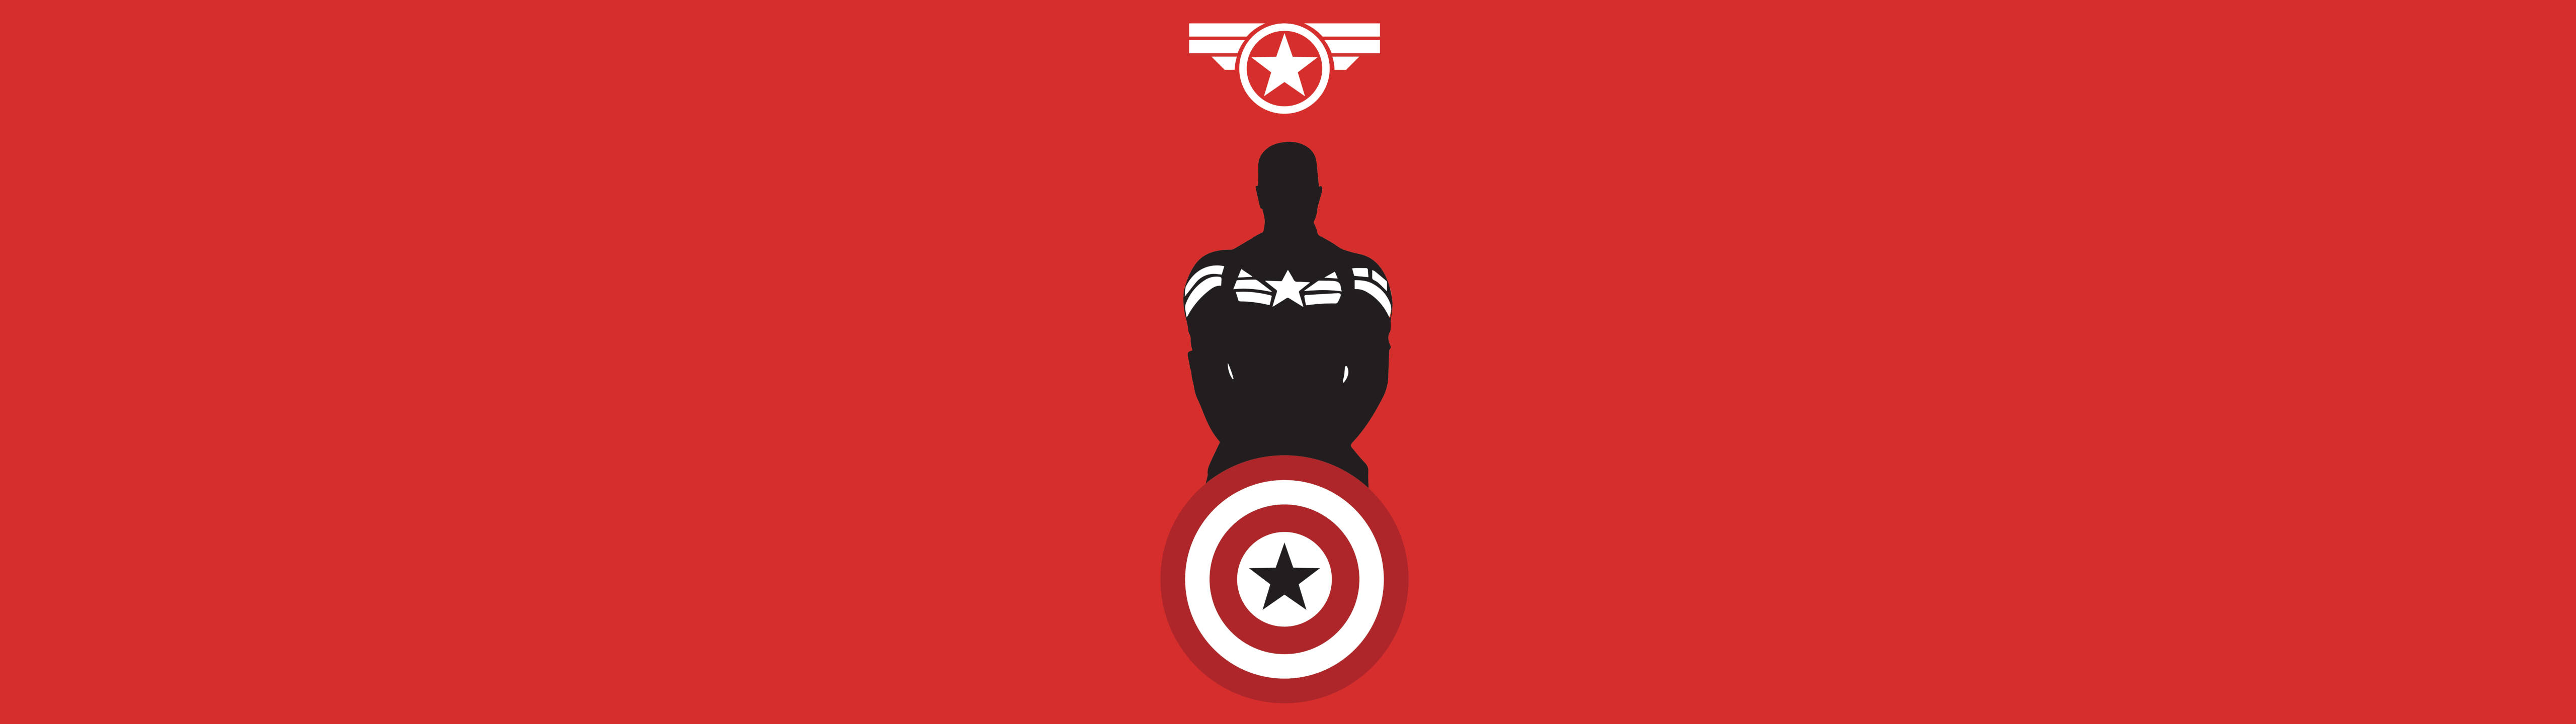 Marvel Hero Captain America 5120 X 1440